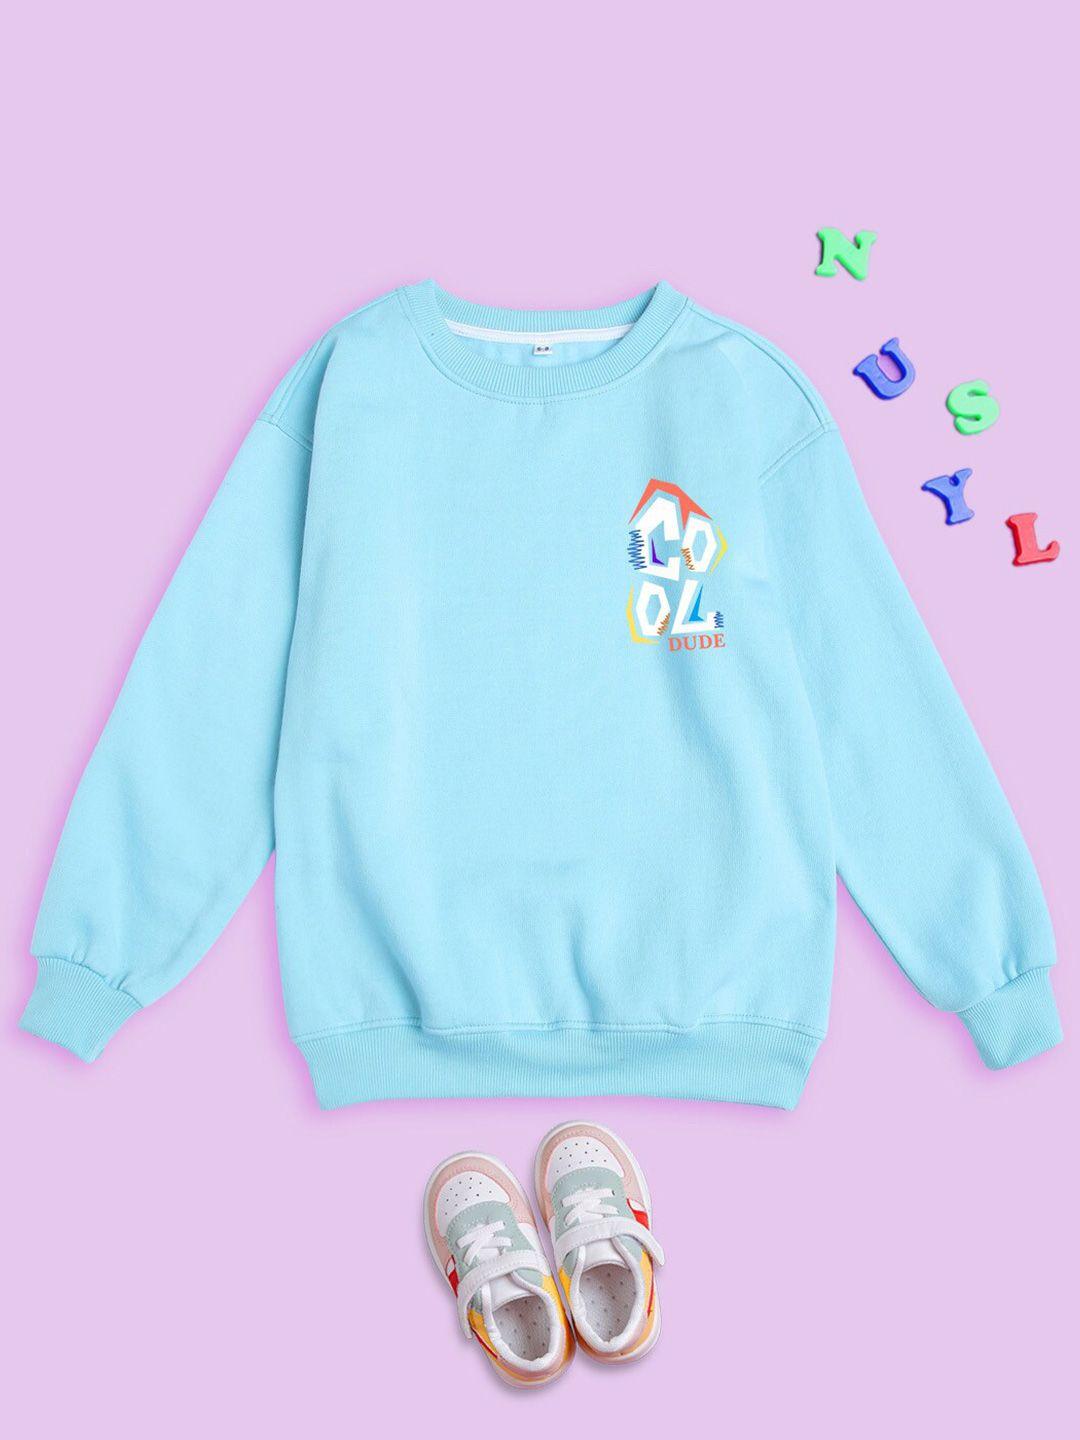 nusyl-kids-oversized-sweatshirt